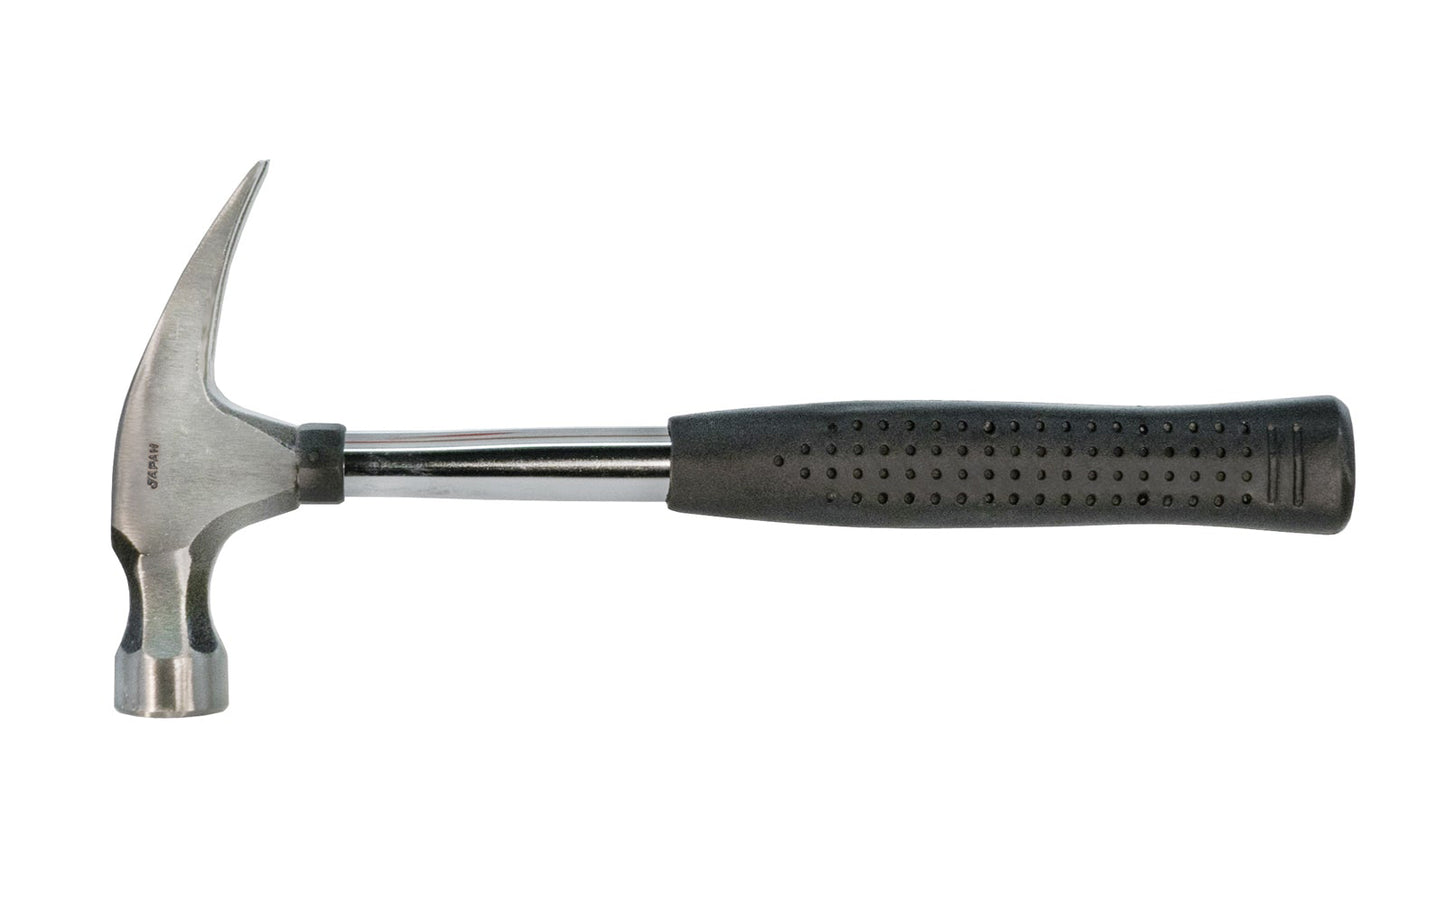 Japanese 16 oz Rip Hammer with Cushion Grip. With a hollow steel tubular handle with a cushion grip.  16 oz head weight